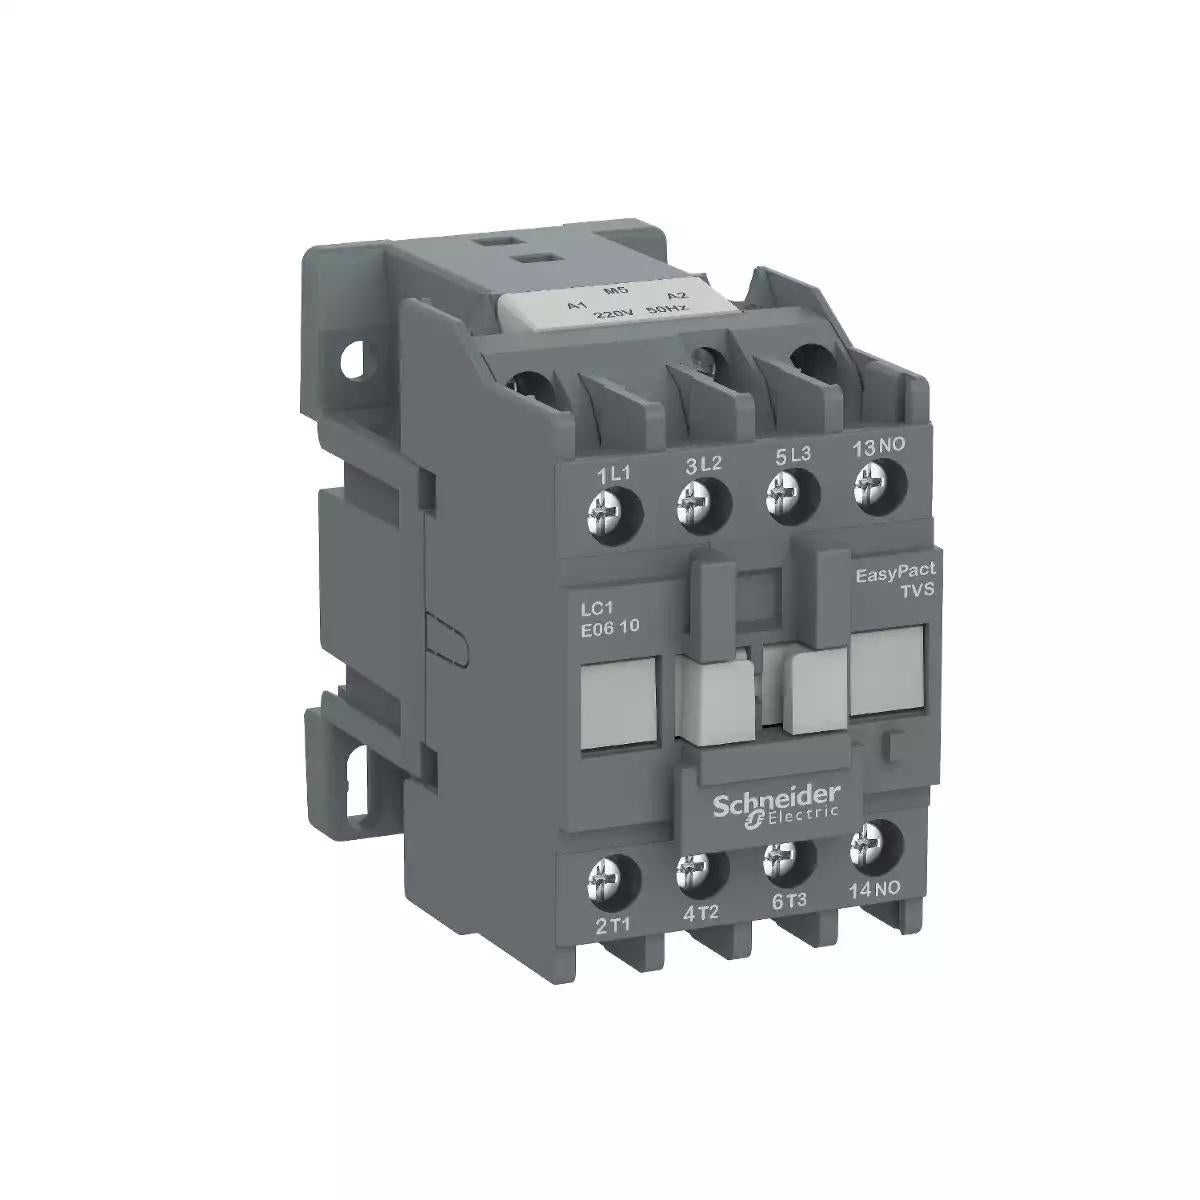 Contactor,EasyPact TVS,3P(3NO),AC-3,<=440V,12A,220V AC coil,50/60Hz,1NO auxiliary contact